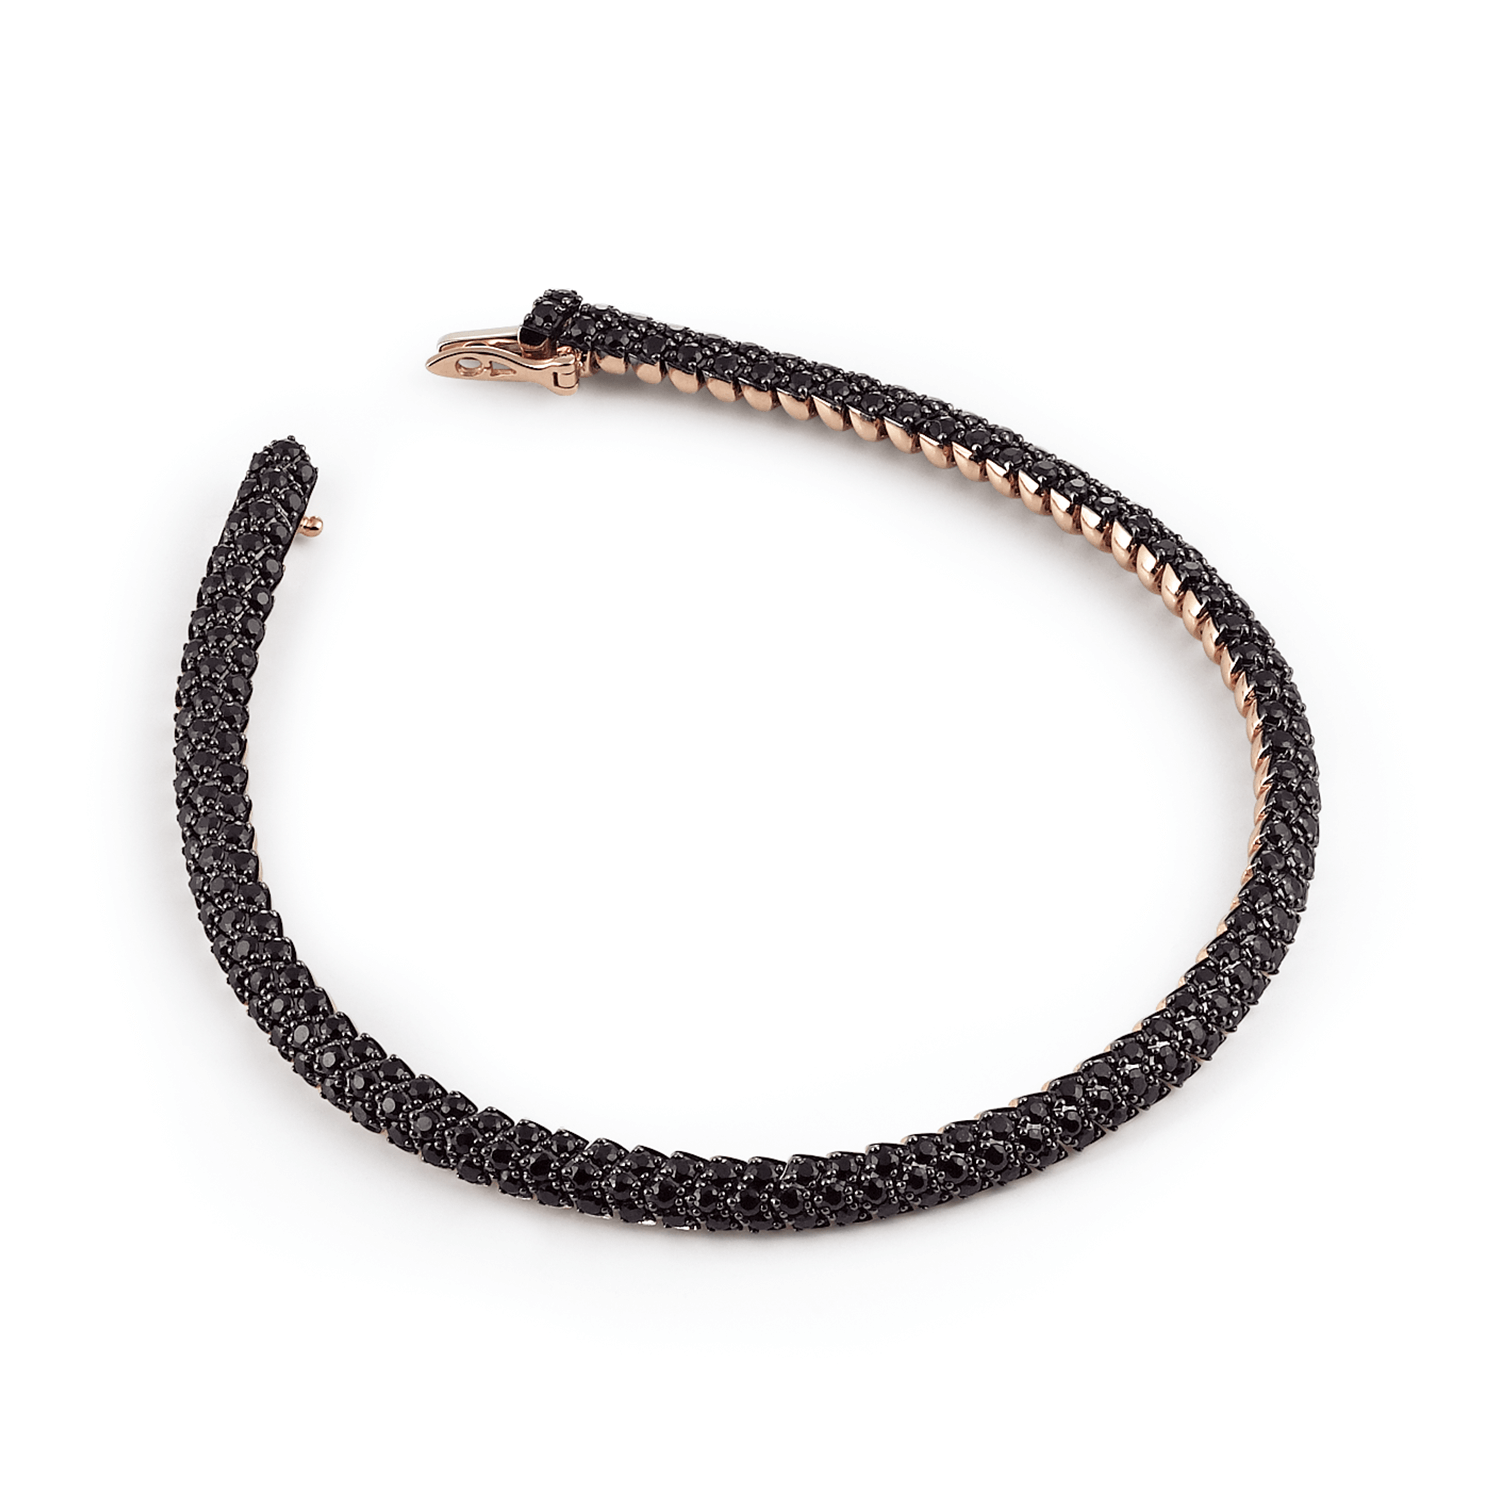 Al Coro Amori Bracelet in 18k Rose Gold with Black Sapphires - Orsini Jewellers NZ